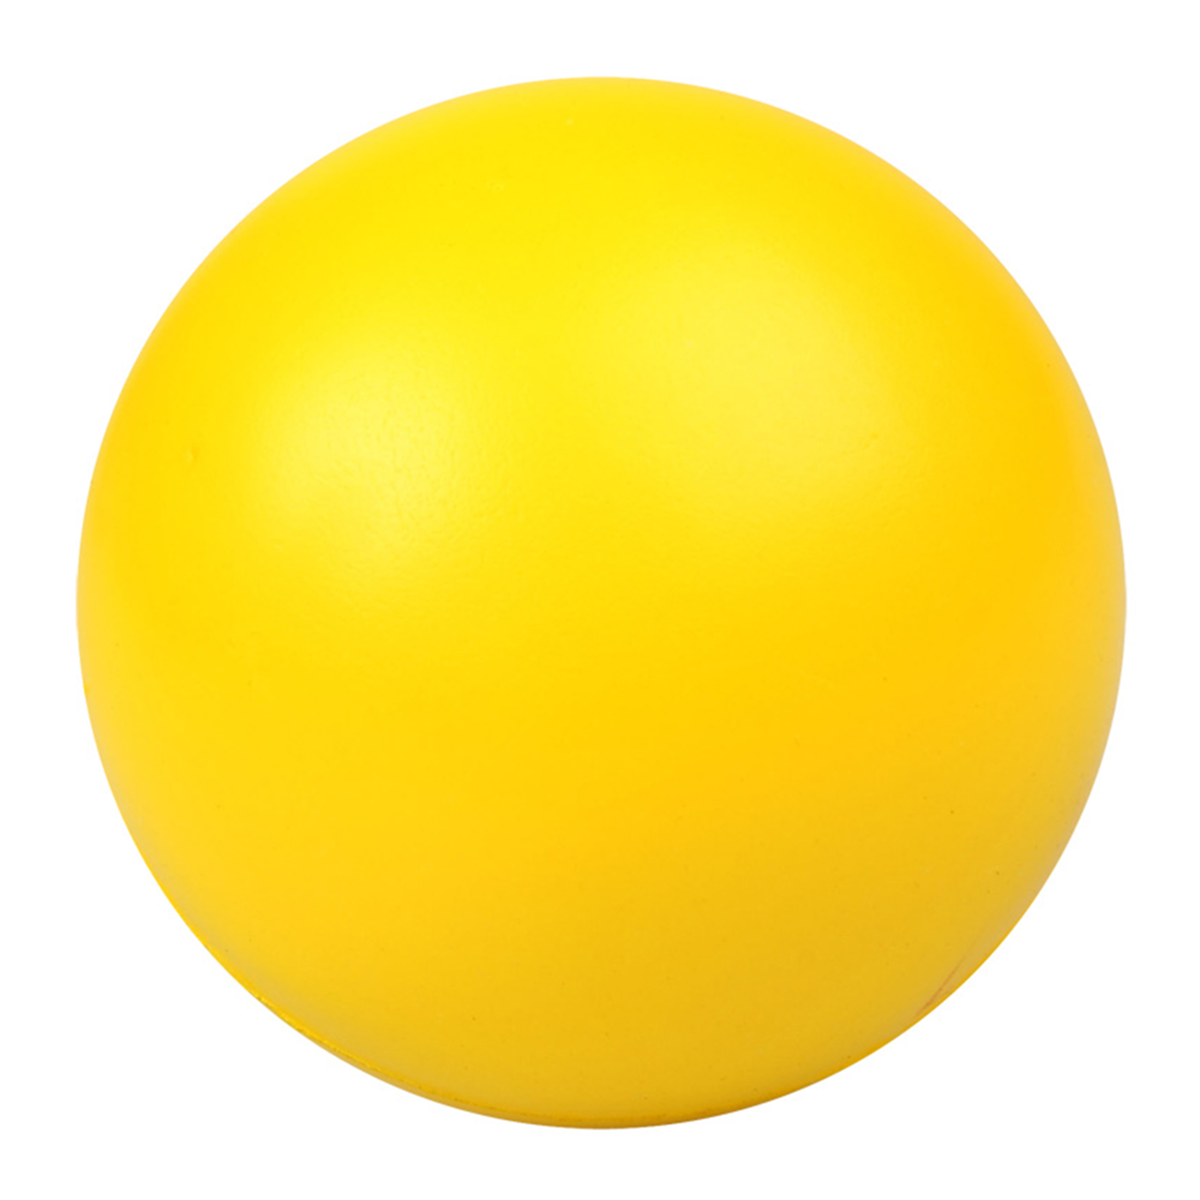 Yellow,Ball,Orange,Ball,Circle,Lacrosse ball,Sphere,Sports equipment.